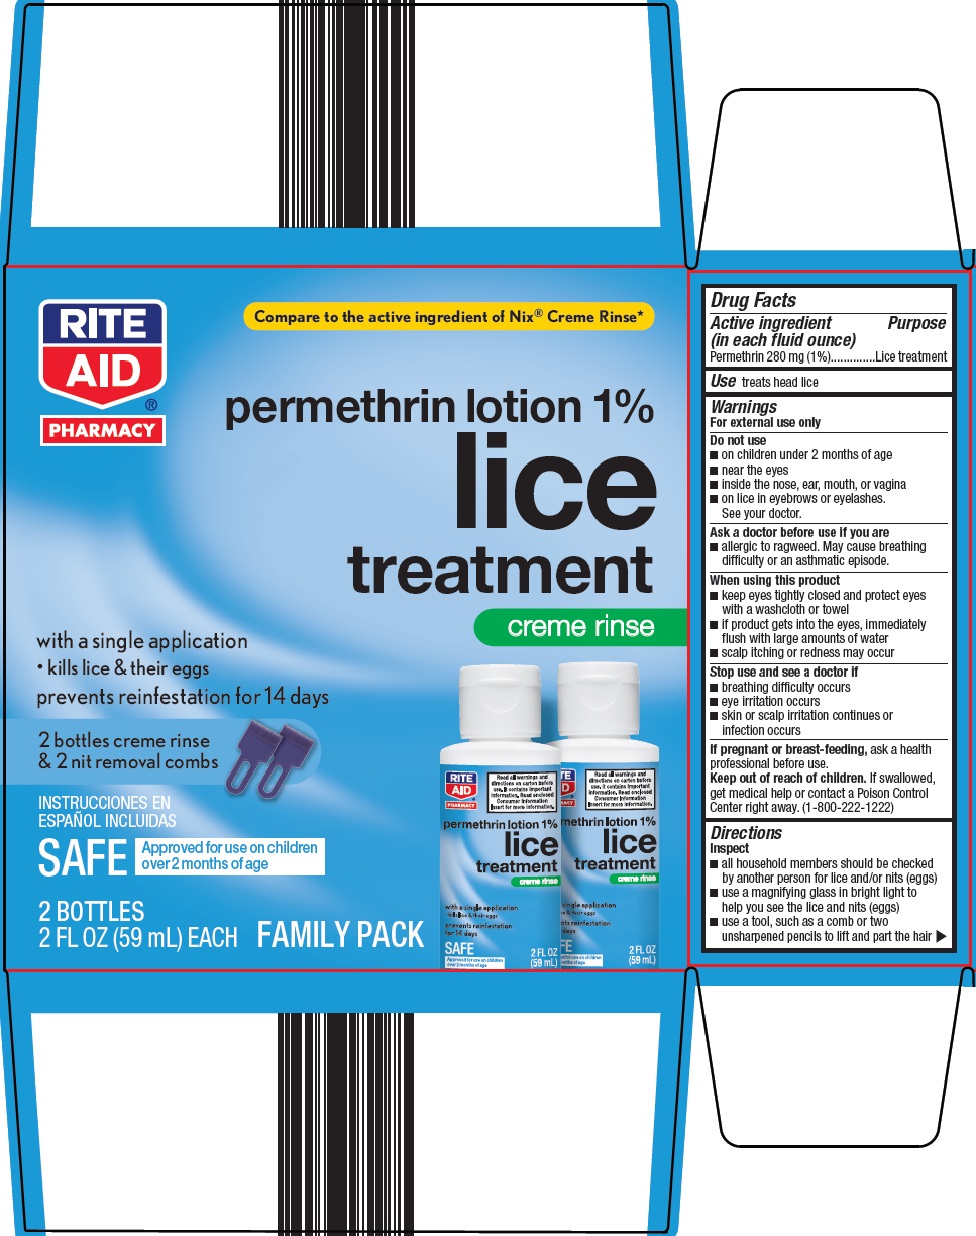 lice treatment image 1